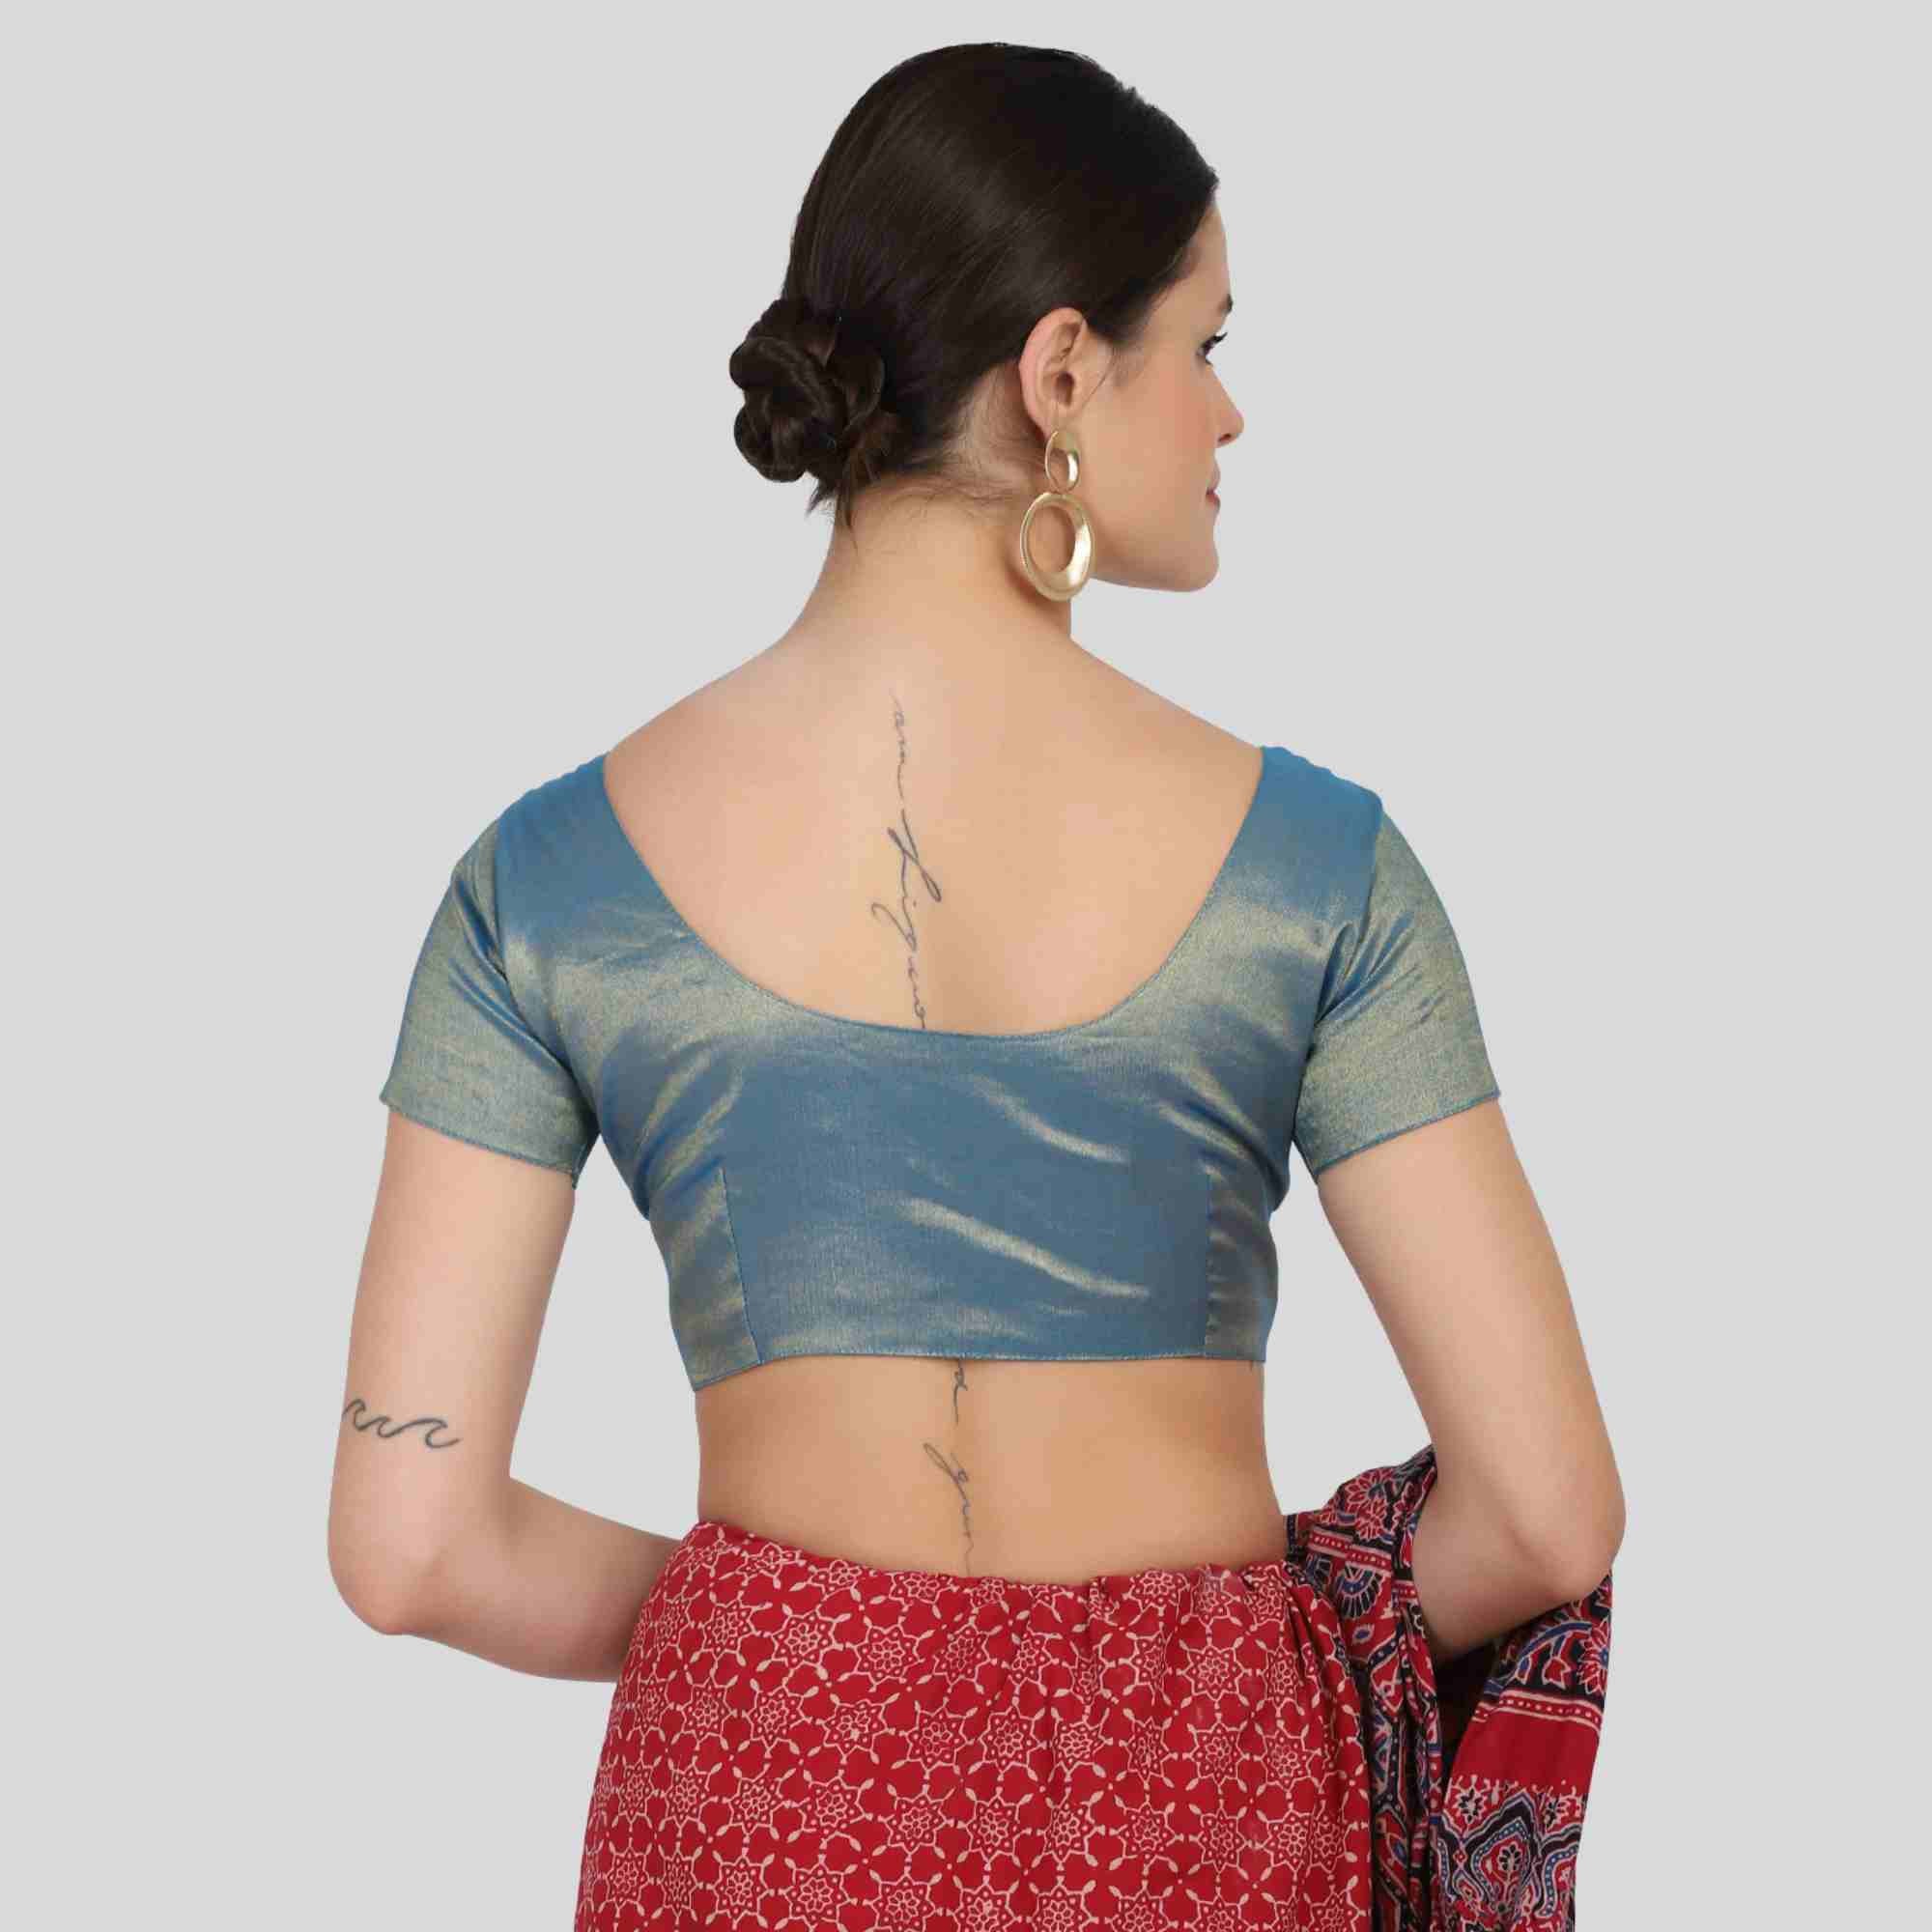 Tissue Blue blouse for Kerala saree